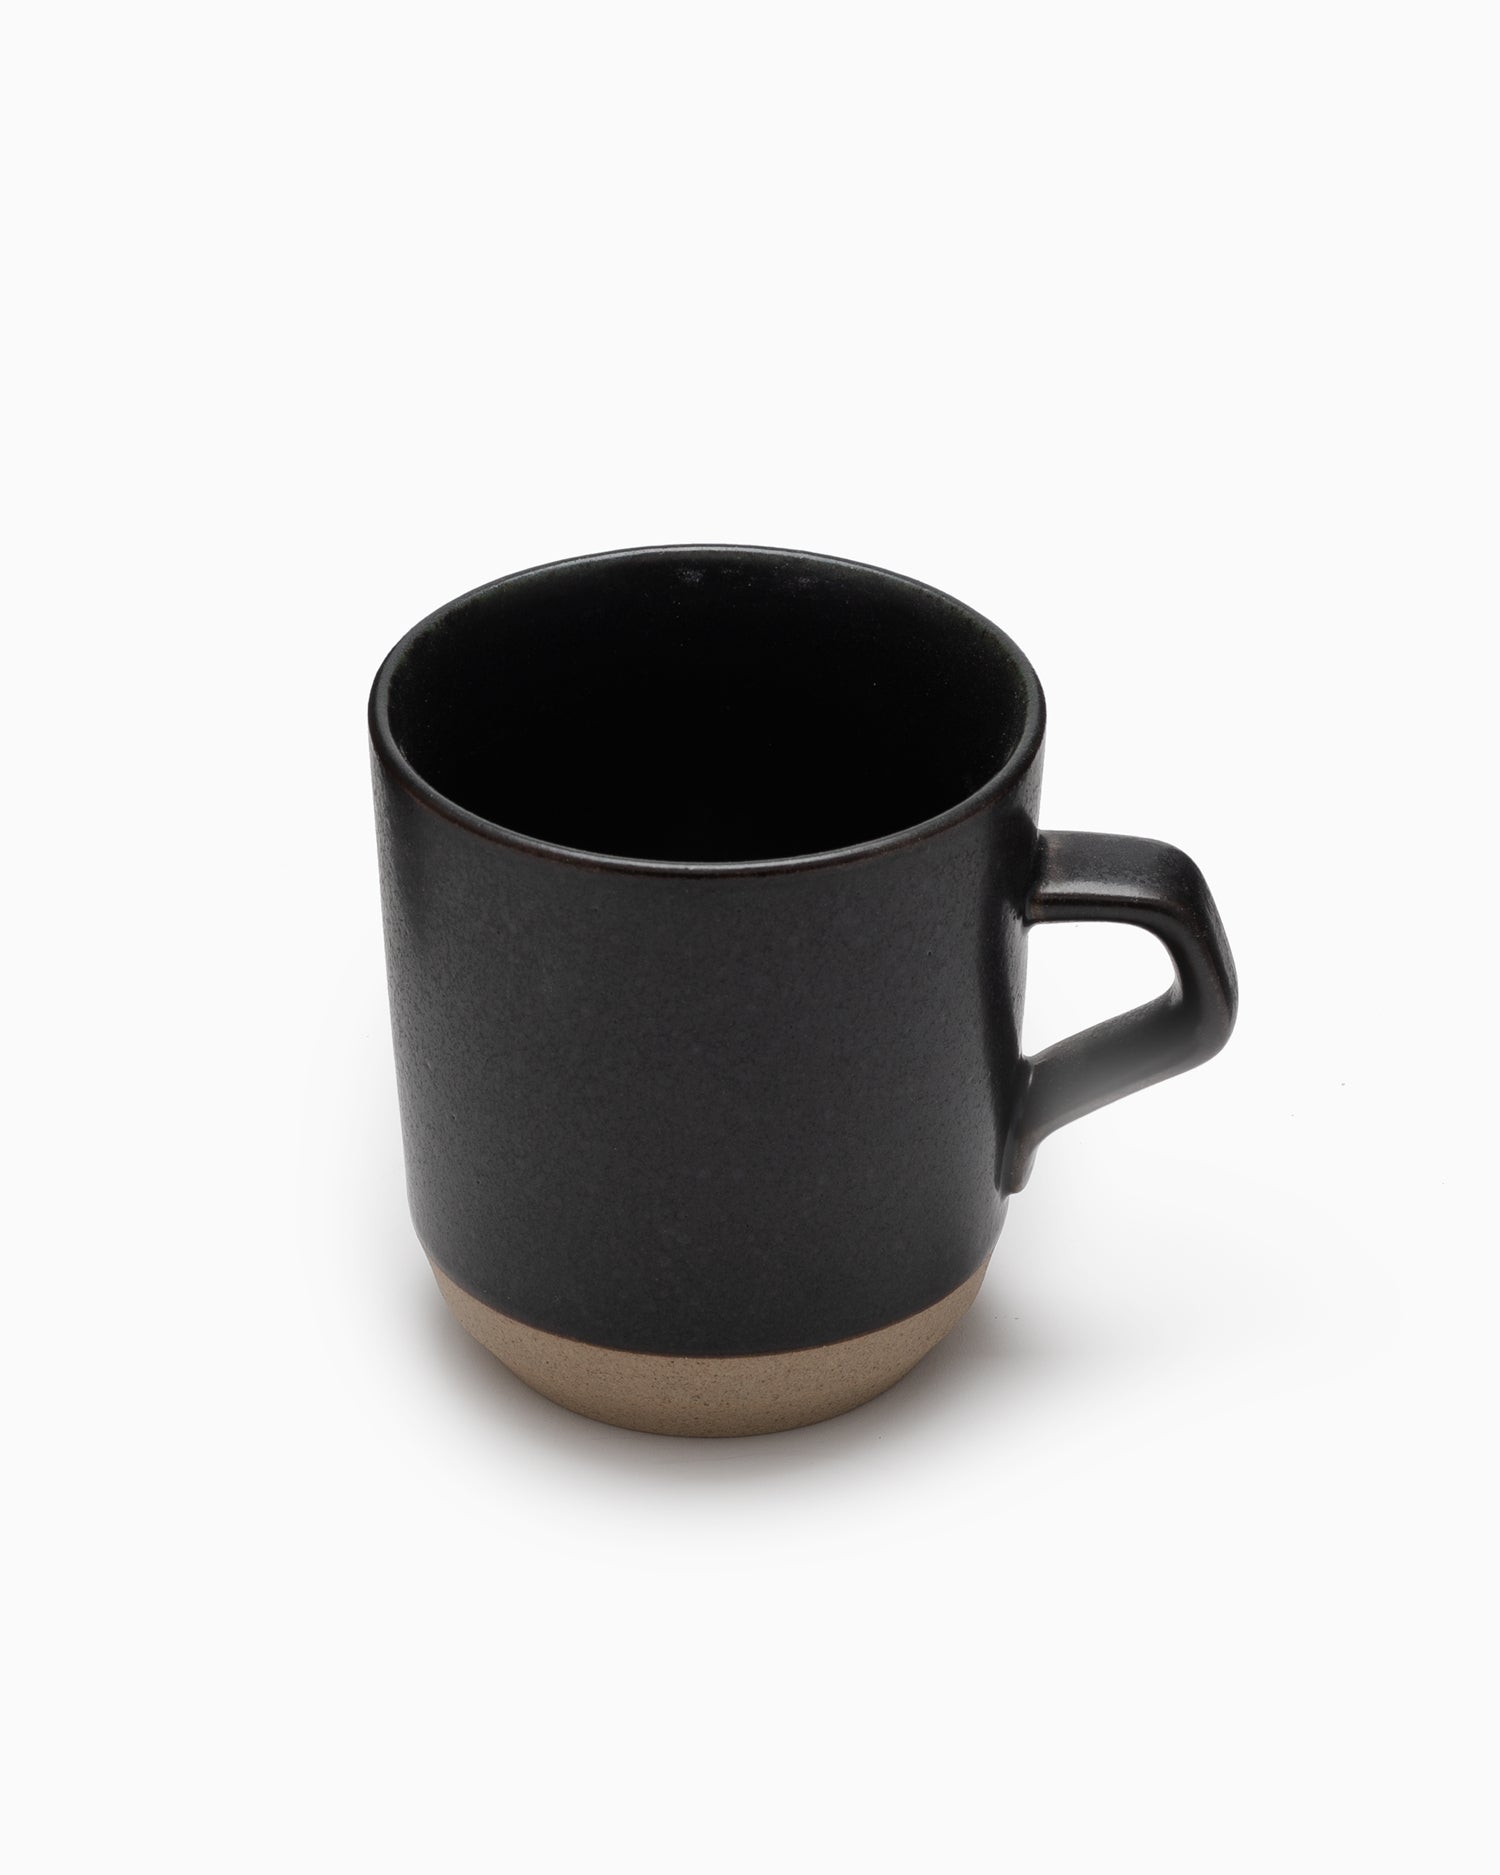 CLK-151 Large Mug - Black